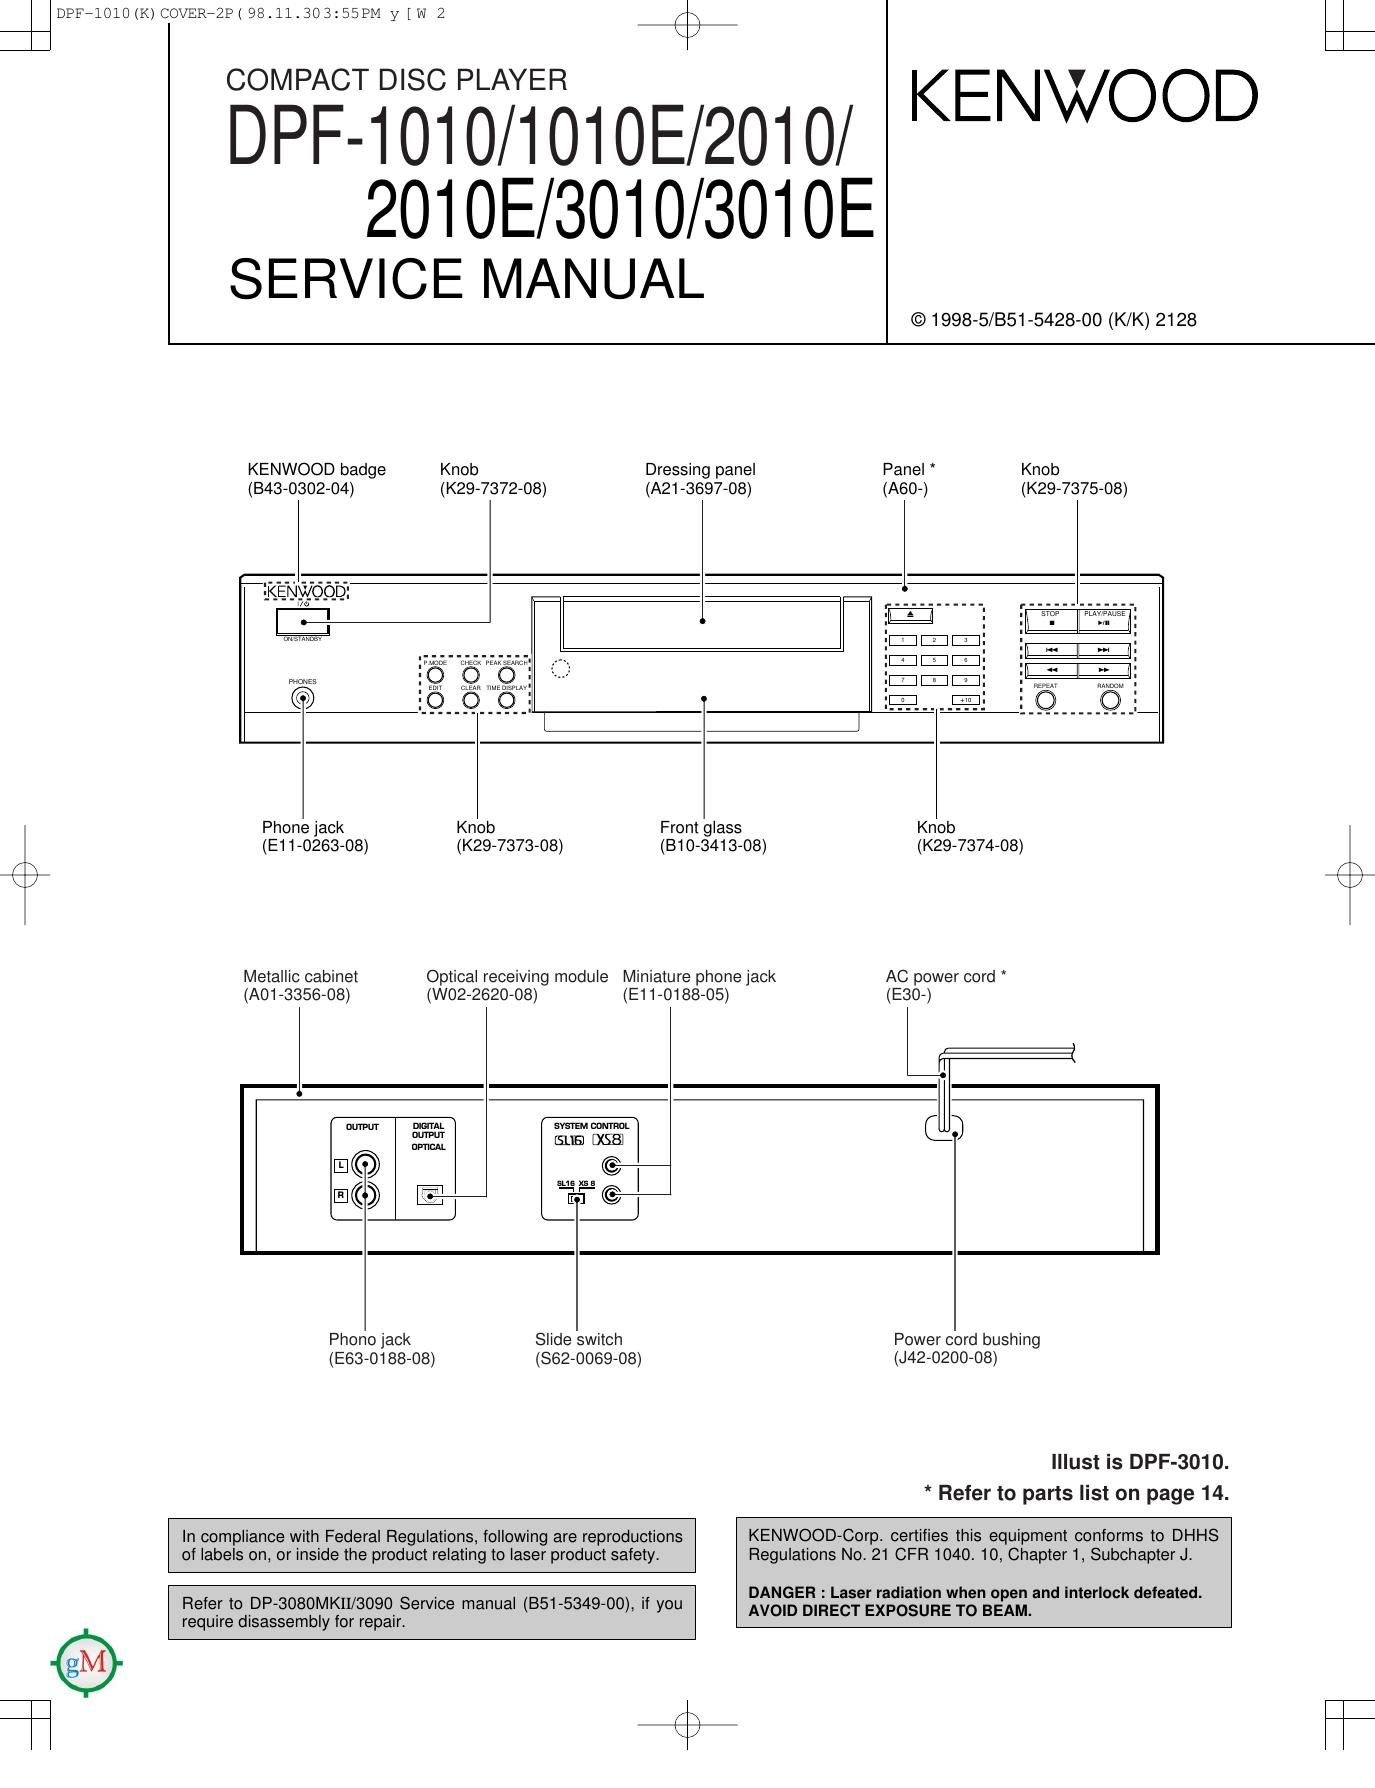 Kenwood DPF 3010 E Service Manual